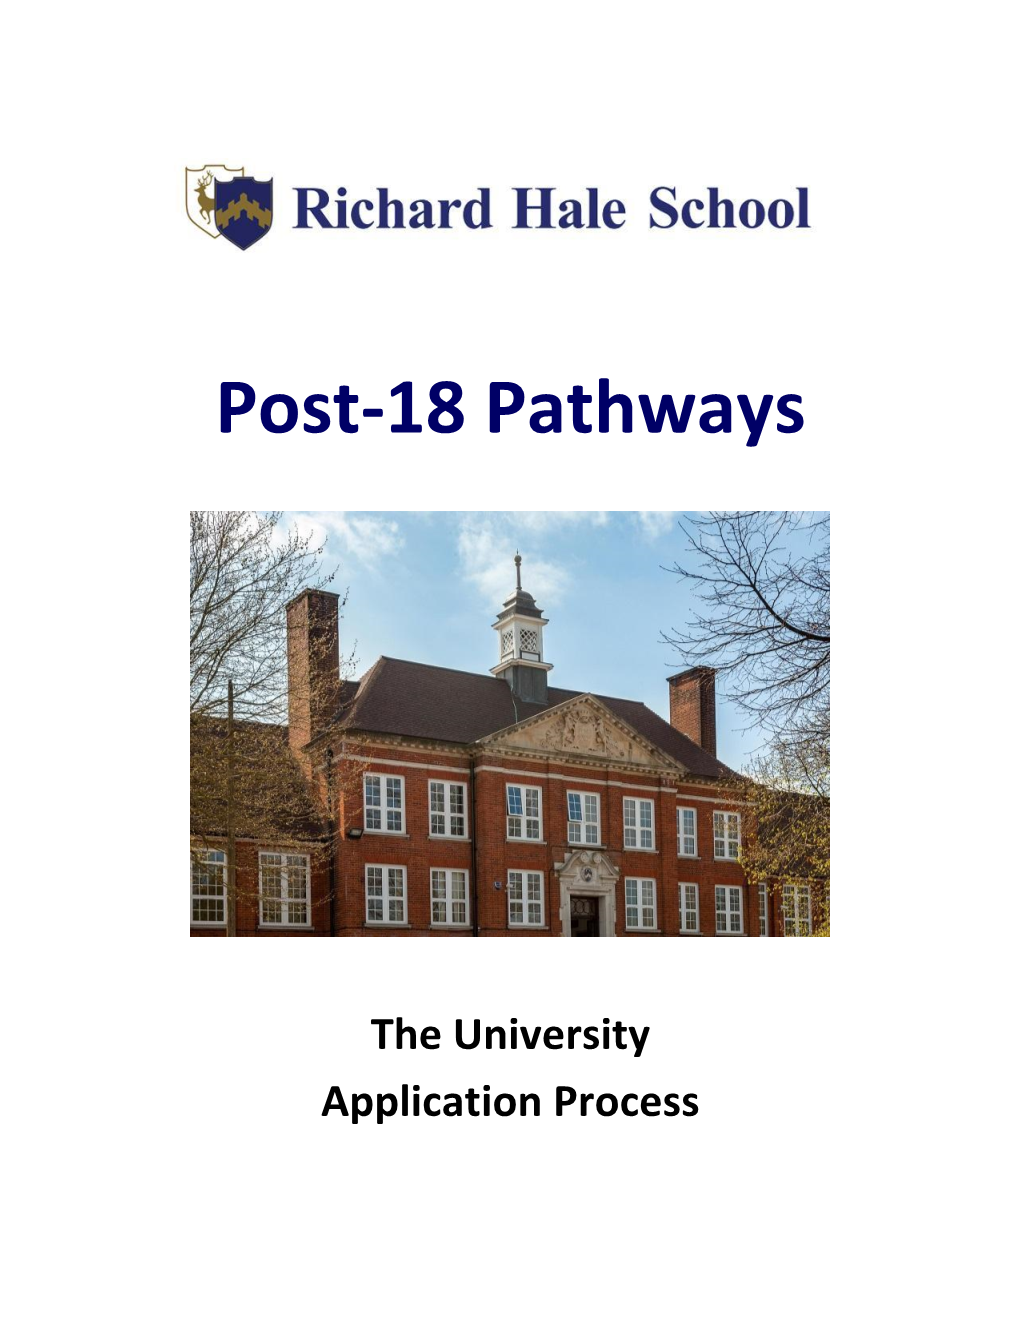 The University Application Process